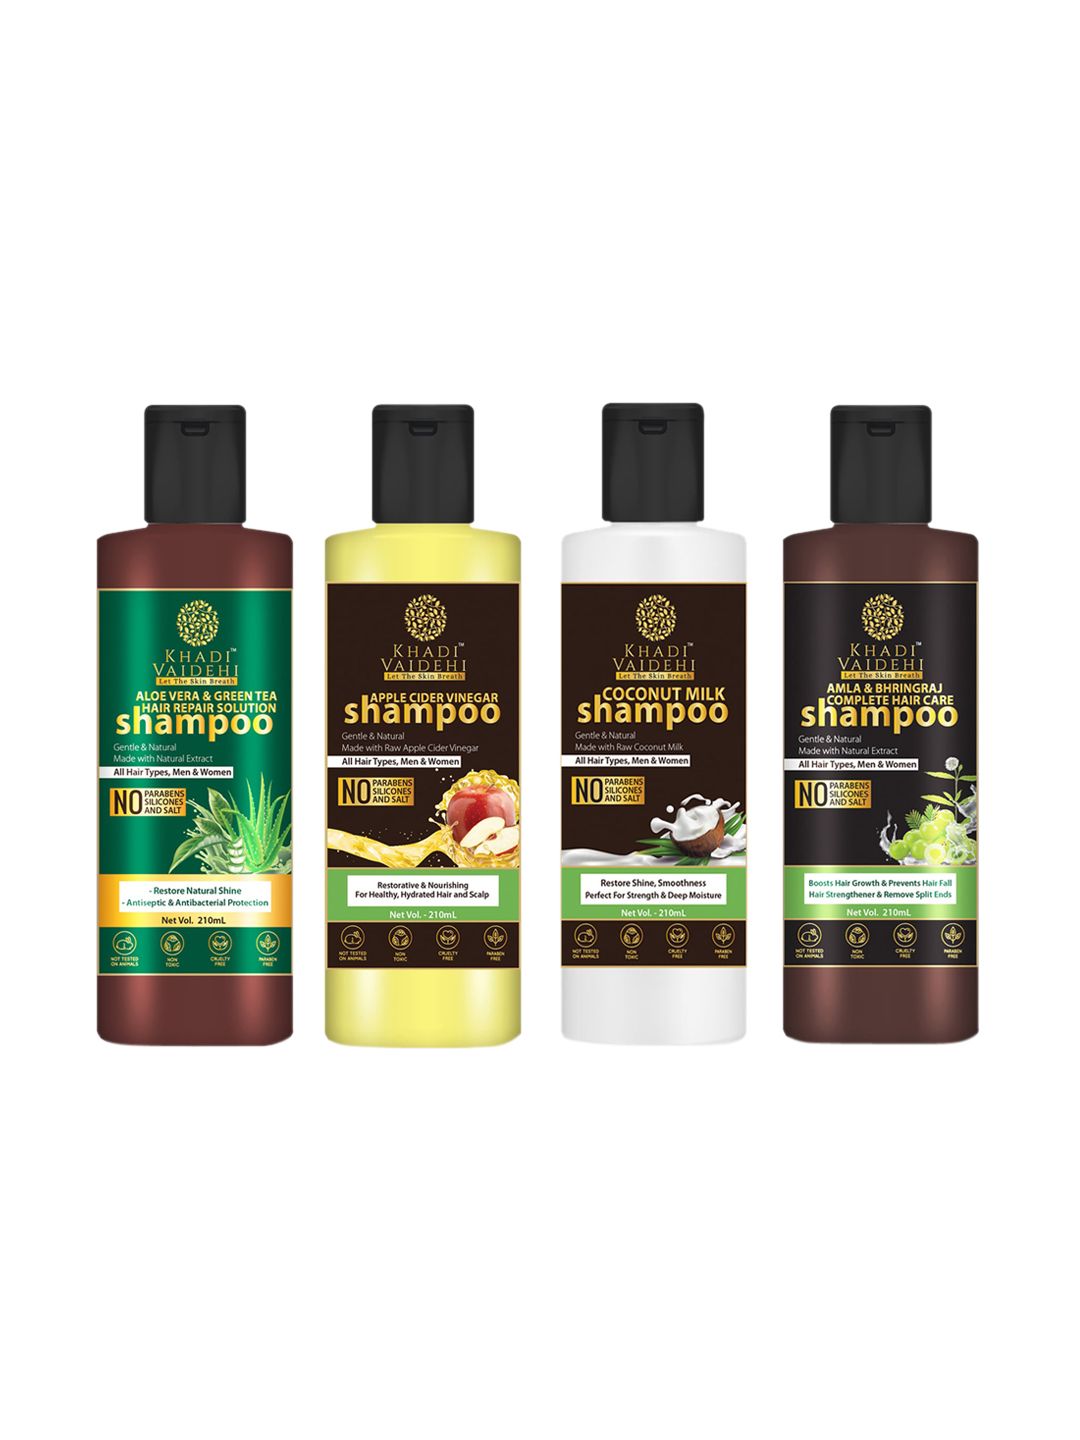 Khadi Vaidehi Set of 4 Paraben-free Shampoo for All Hair Types - 210 ml Each Price in India